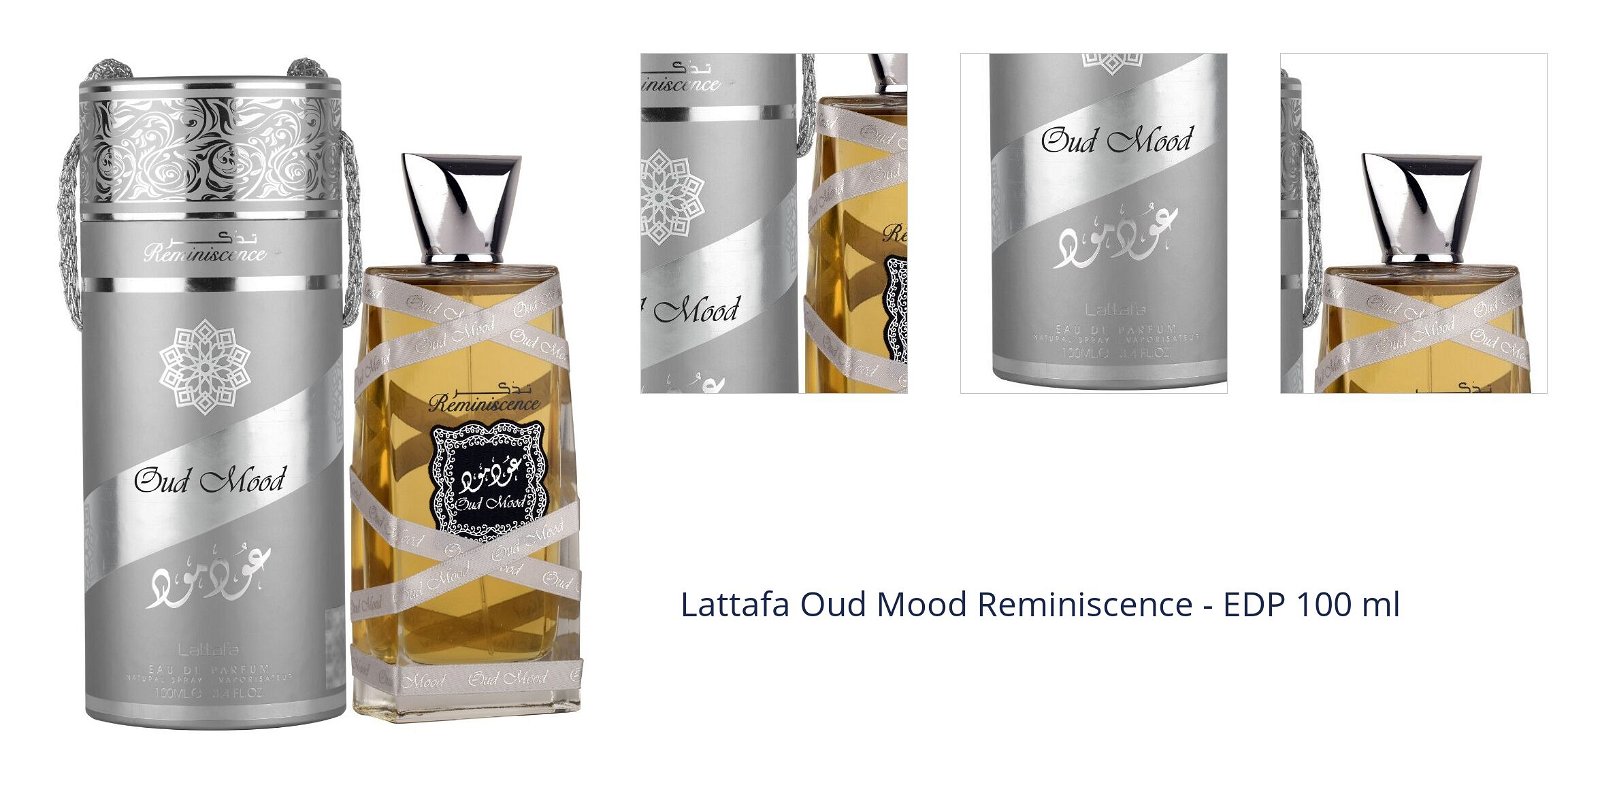 Lattafa Oud Mood Reminiscence - EDP 100 ml 1